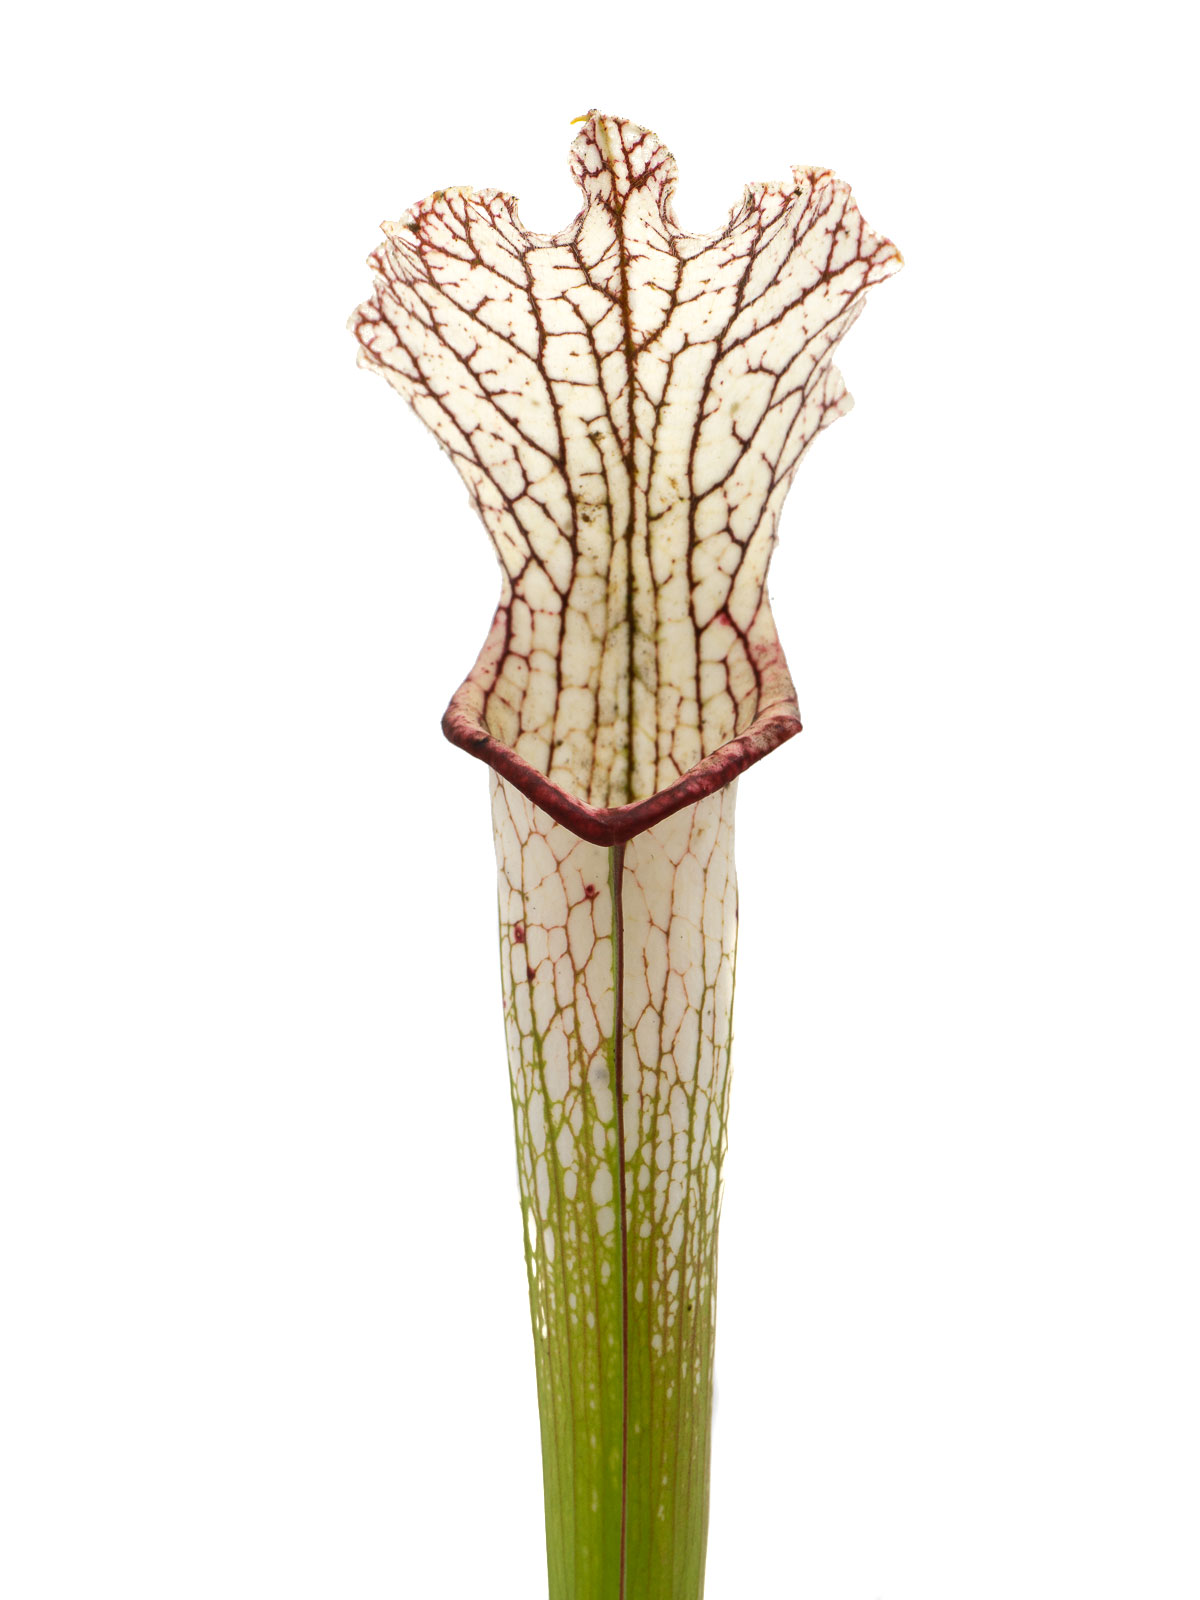 S. leucophylla - KP5.1, Mirek Srba